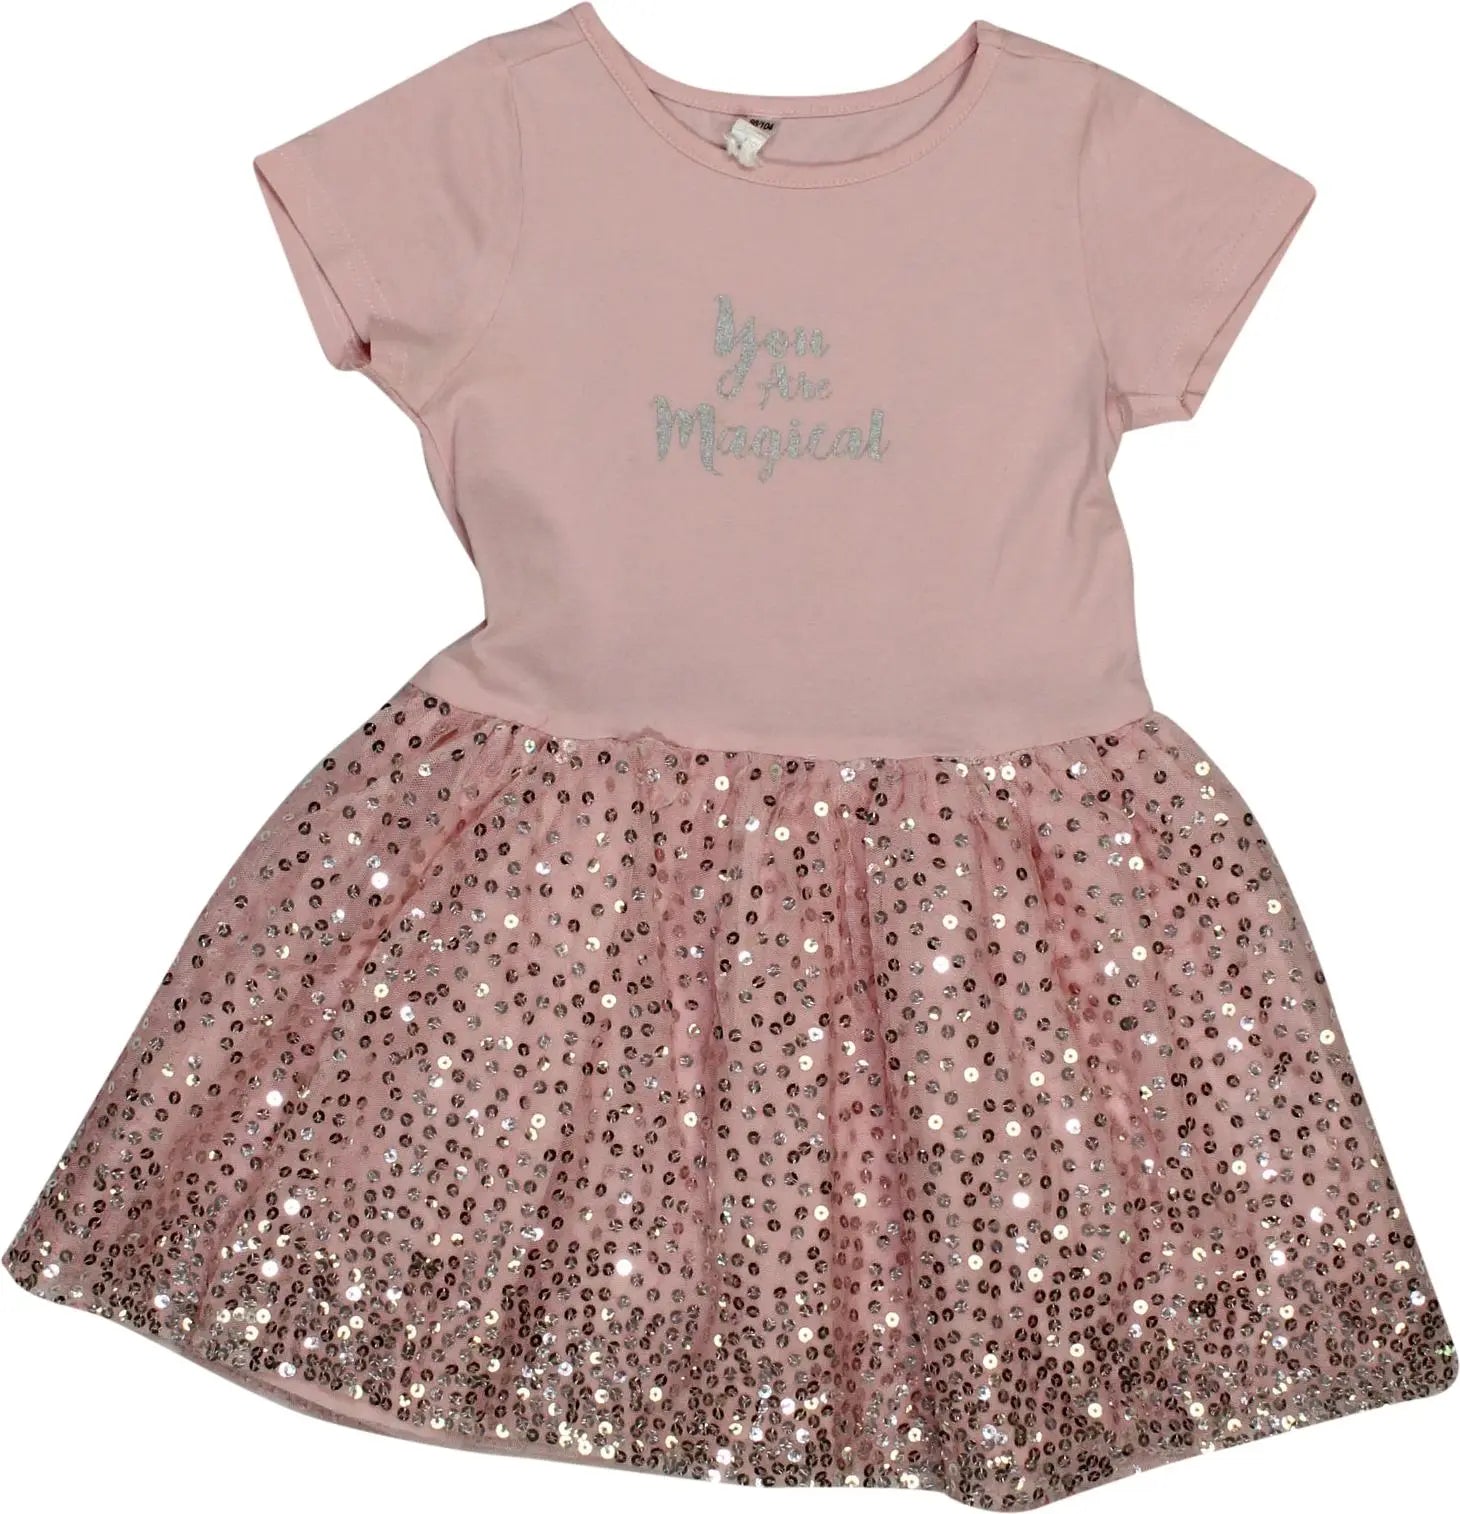 Zeeman - Pink Dress- ThriftTale.com - Vintage and second handclothing